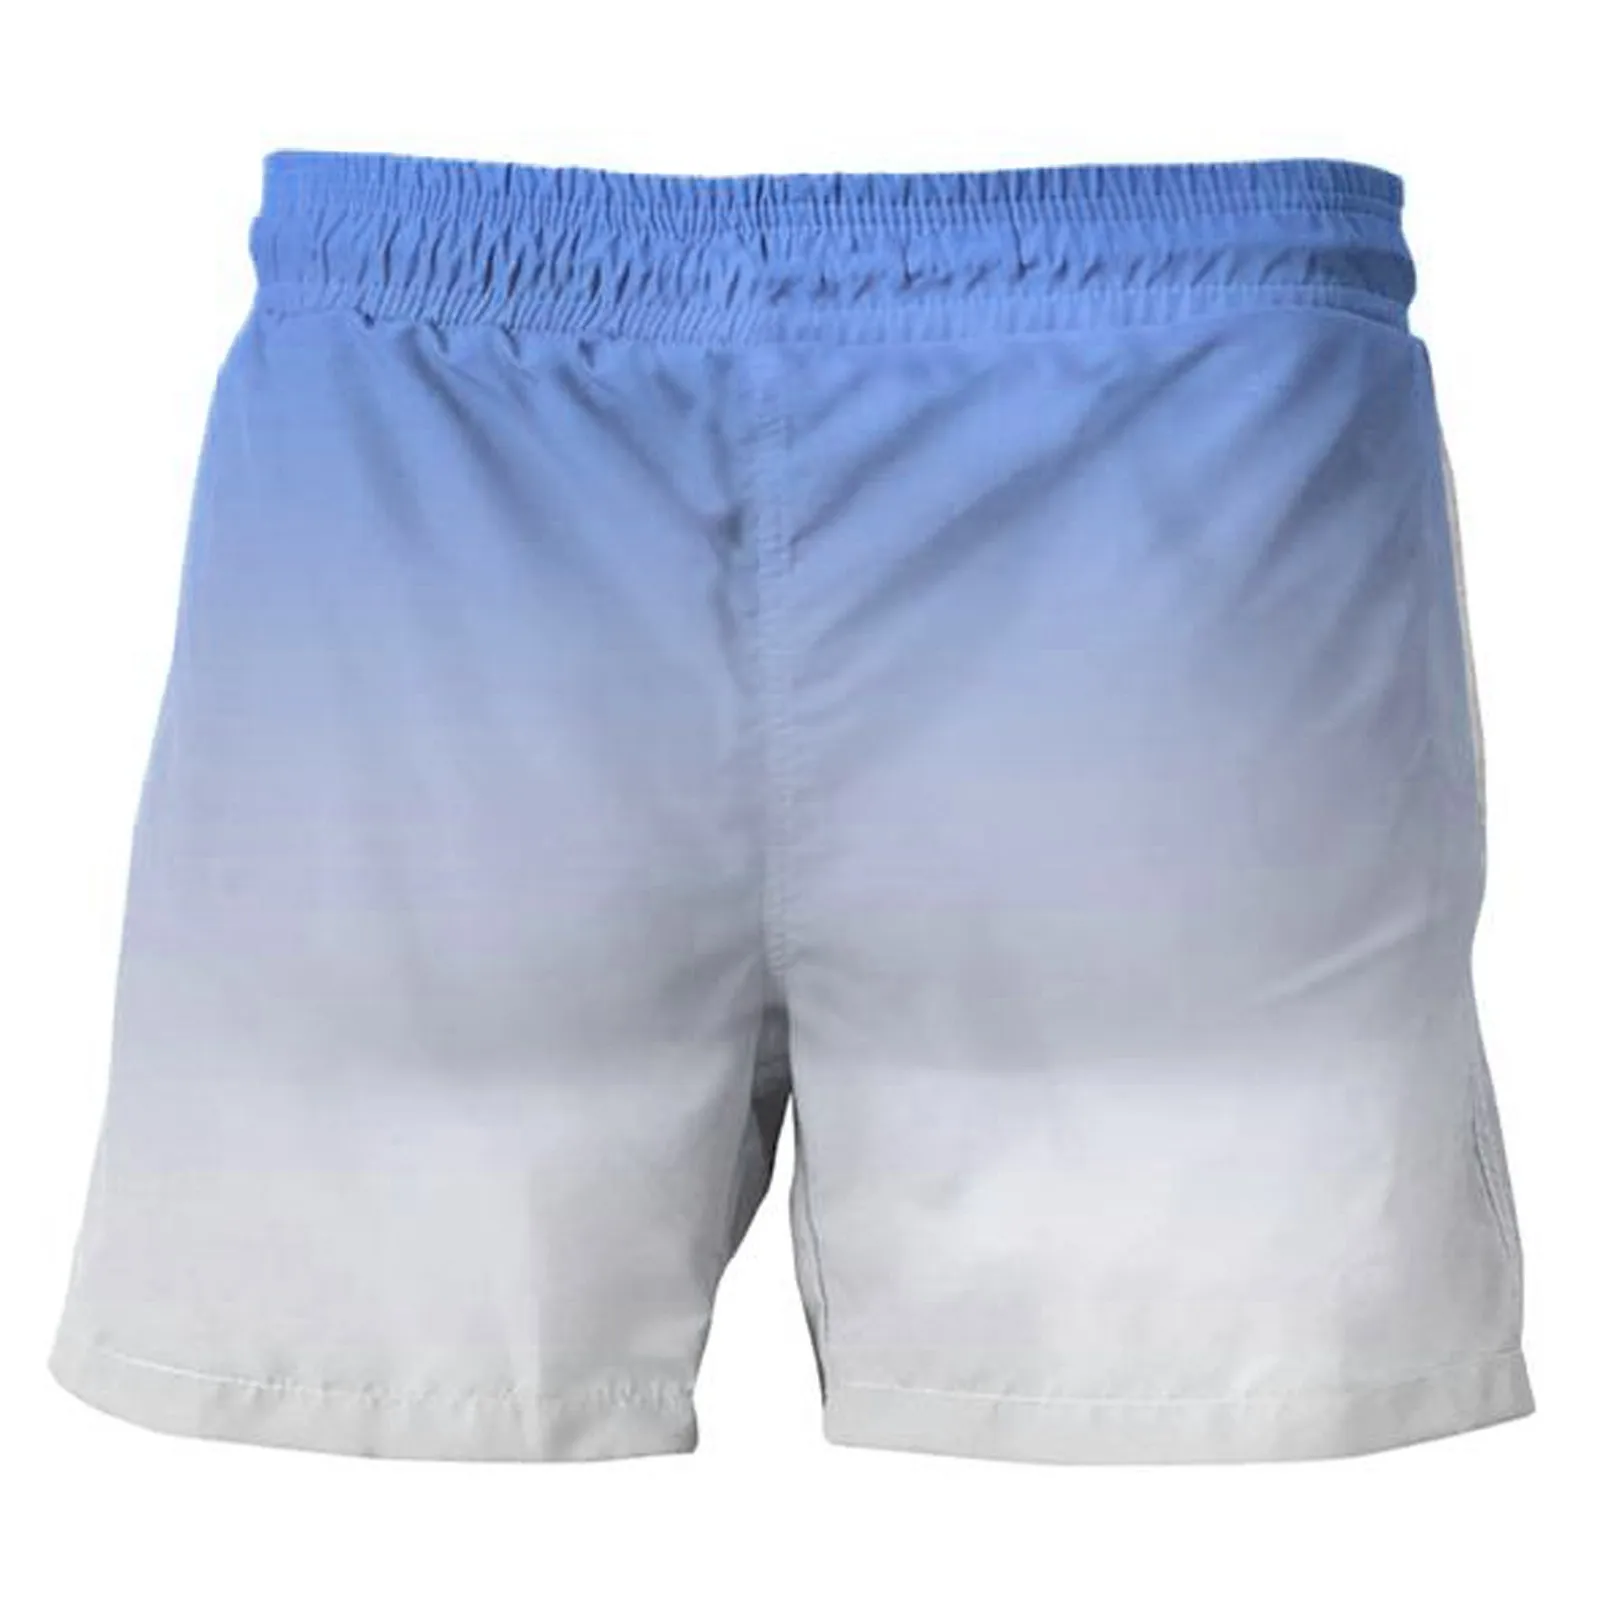 Men’s Drawstring Board Shorts trunks New Casual Printed Gradient Beach Work Board Shorts Swim Trunks mayo sungas de praia homens